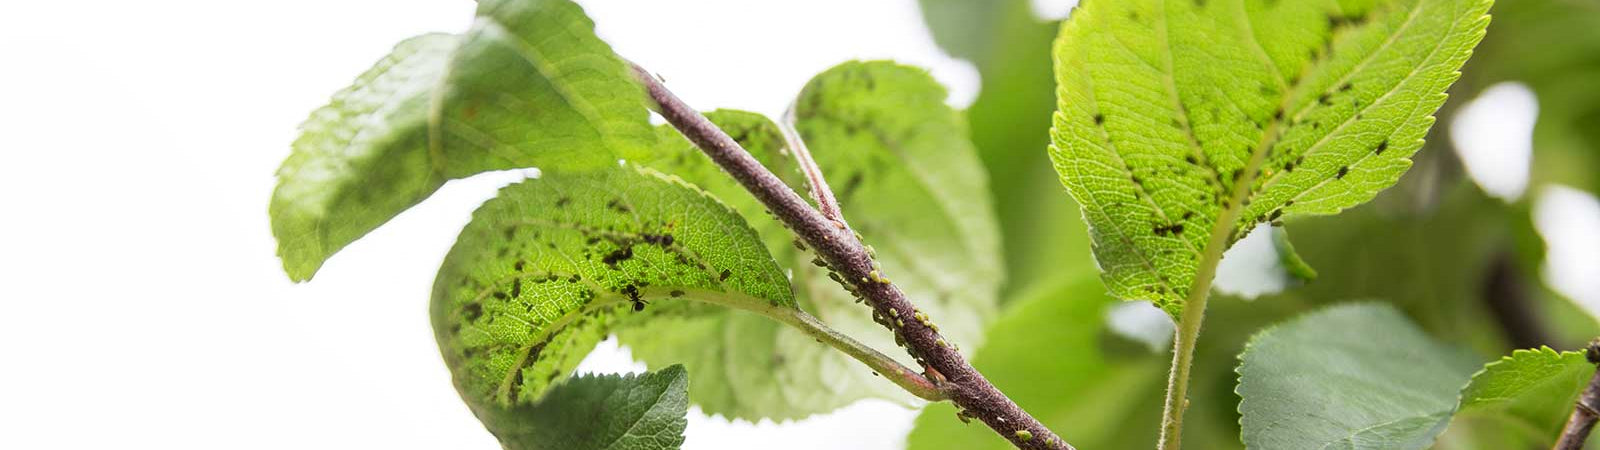 Organic Ways to Fight Crop Pests